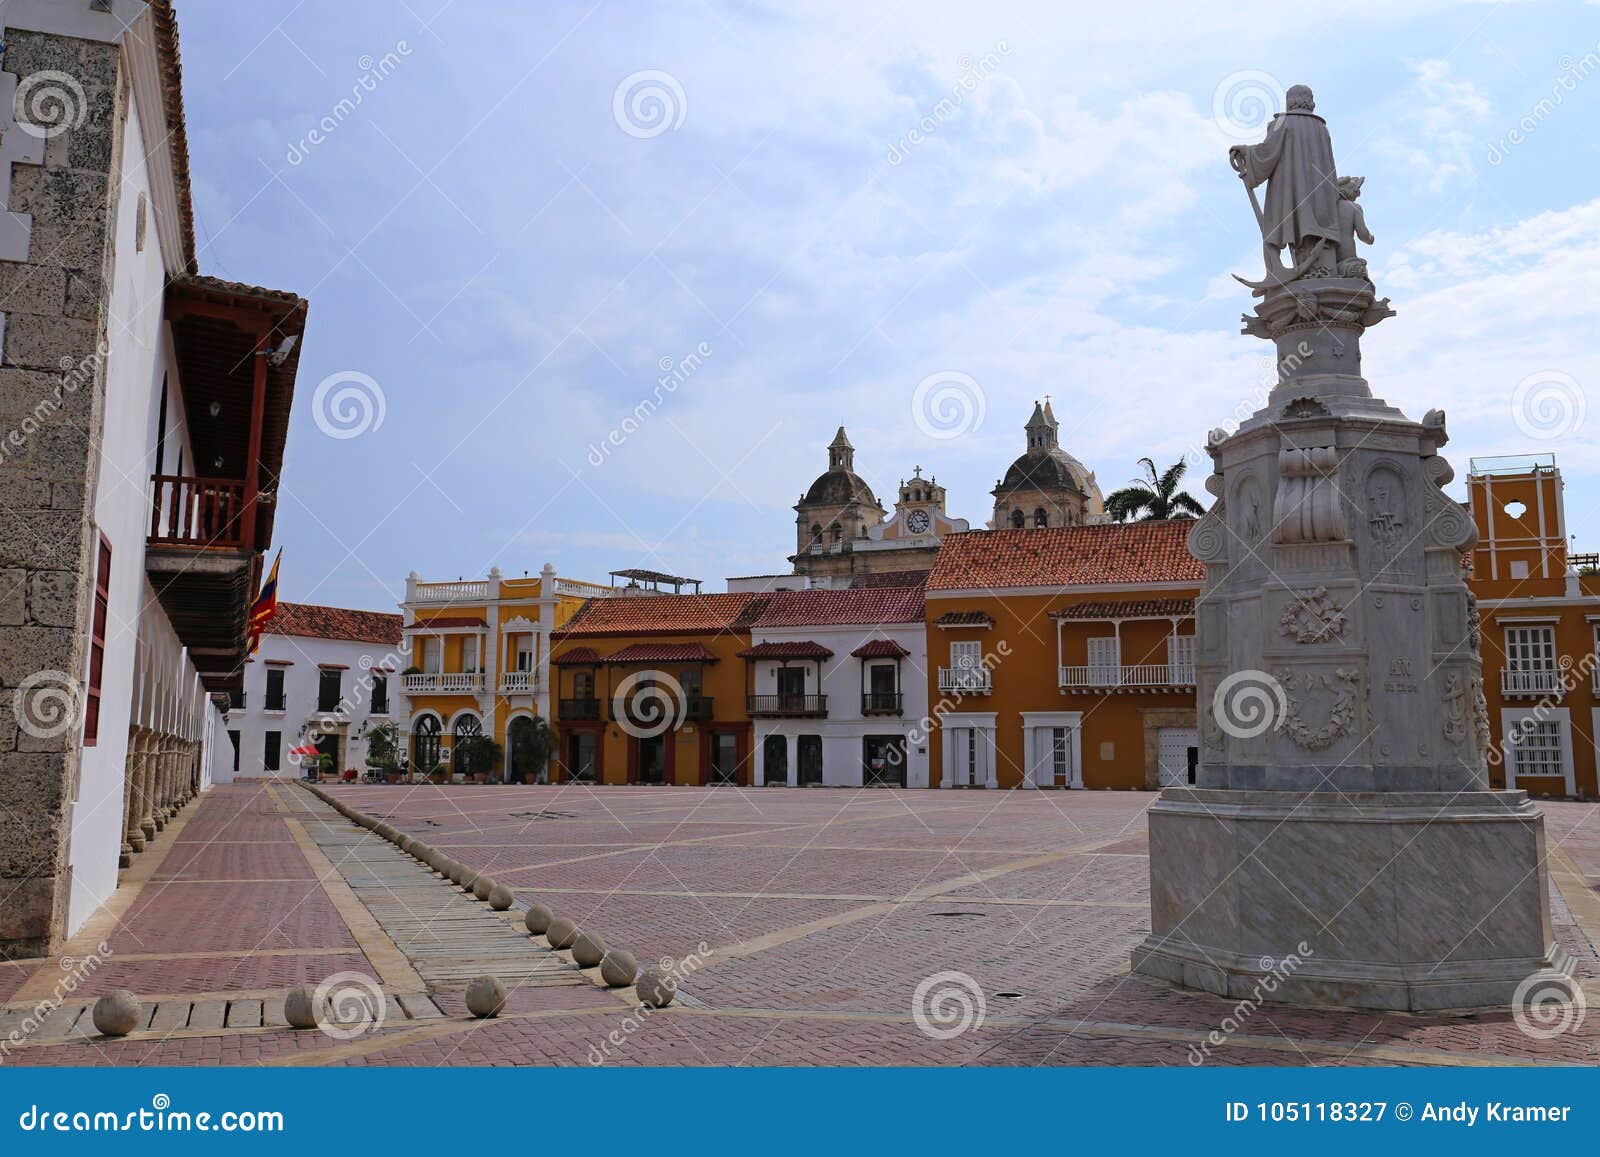 plaza de la aduana in the colonial center of cartagena, colombia